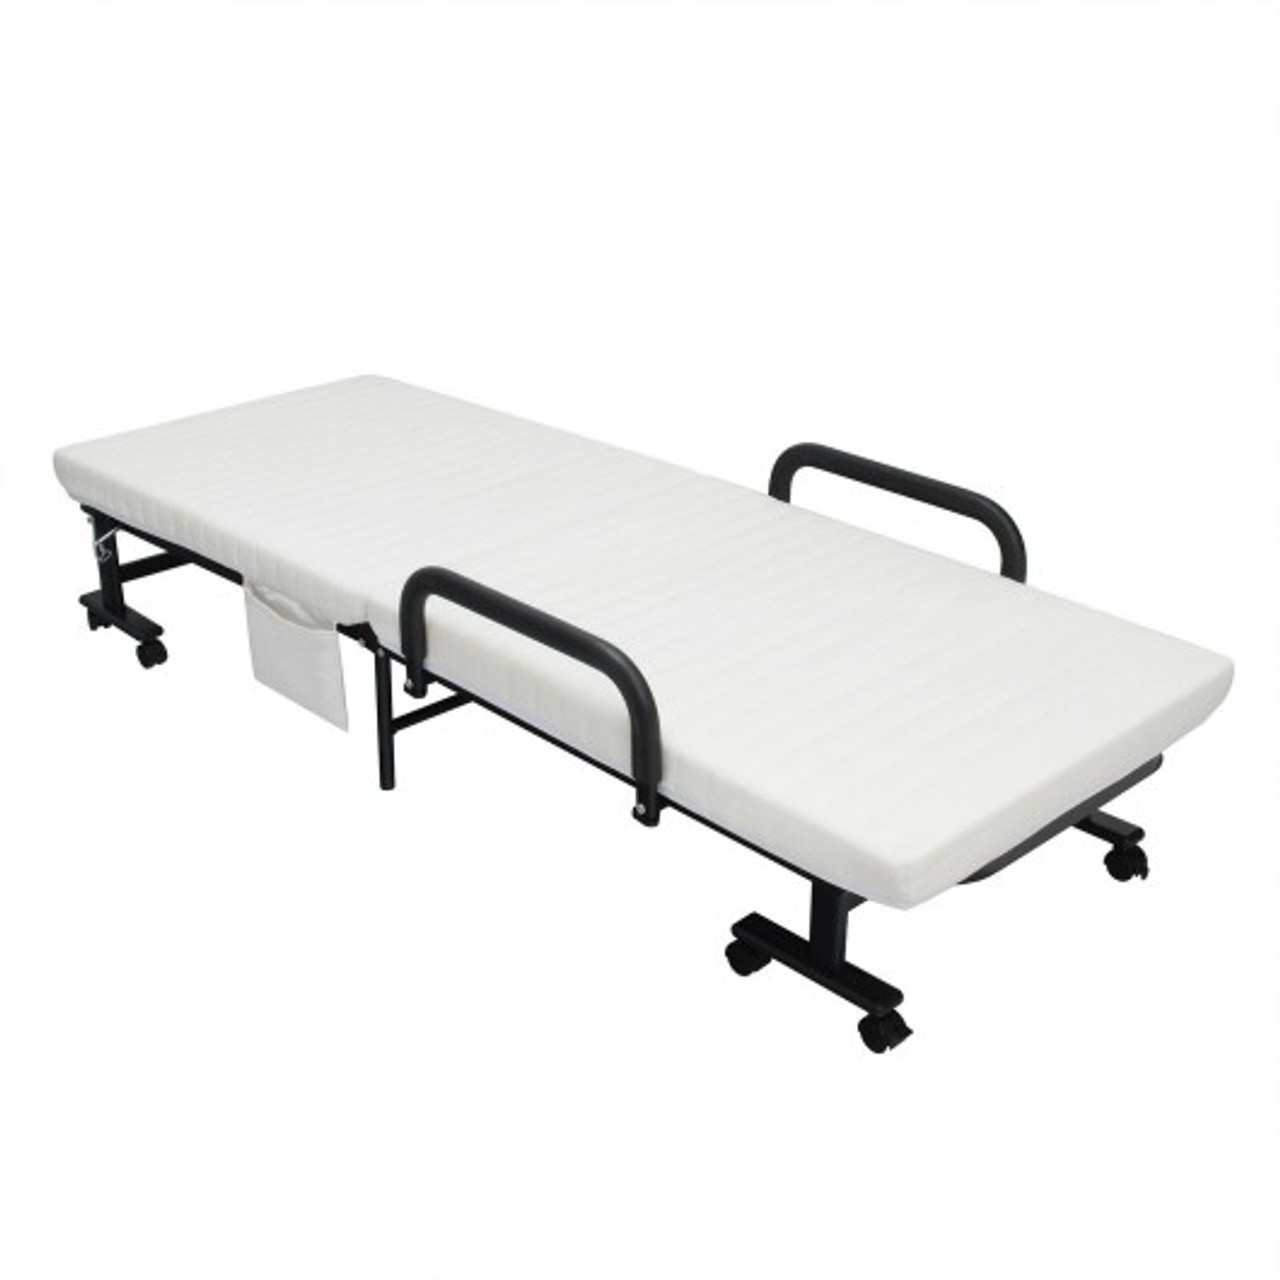 Portable Hospital Medical Beds Wholesale - Buy Medical Beds,Hospital Beds,Medical  Beds Wholesale Product on Alibaba.com